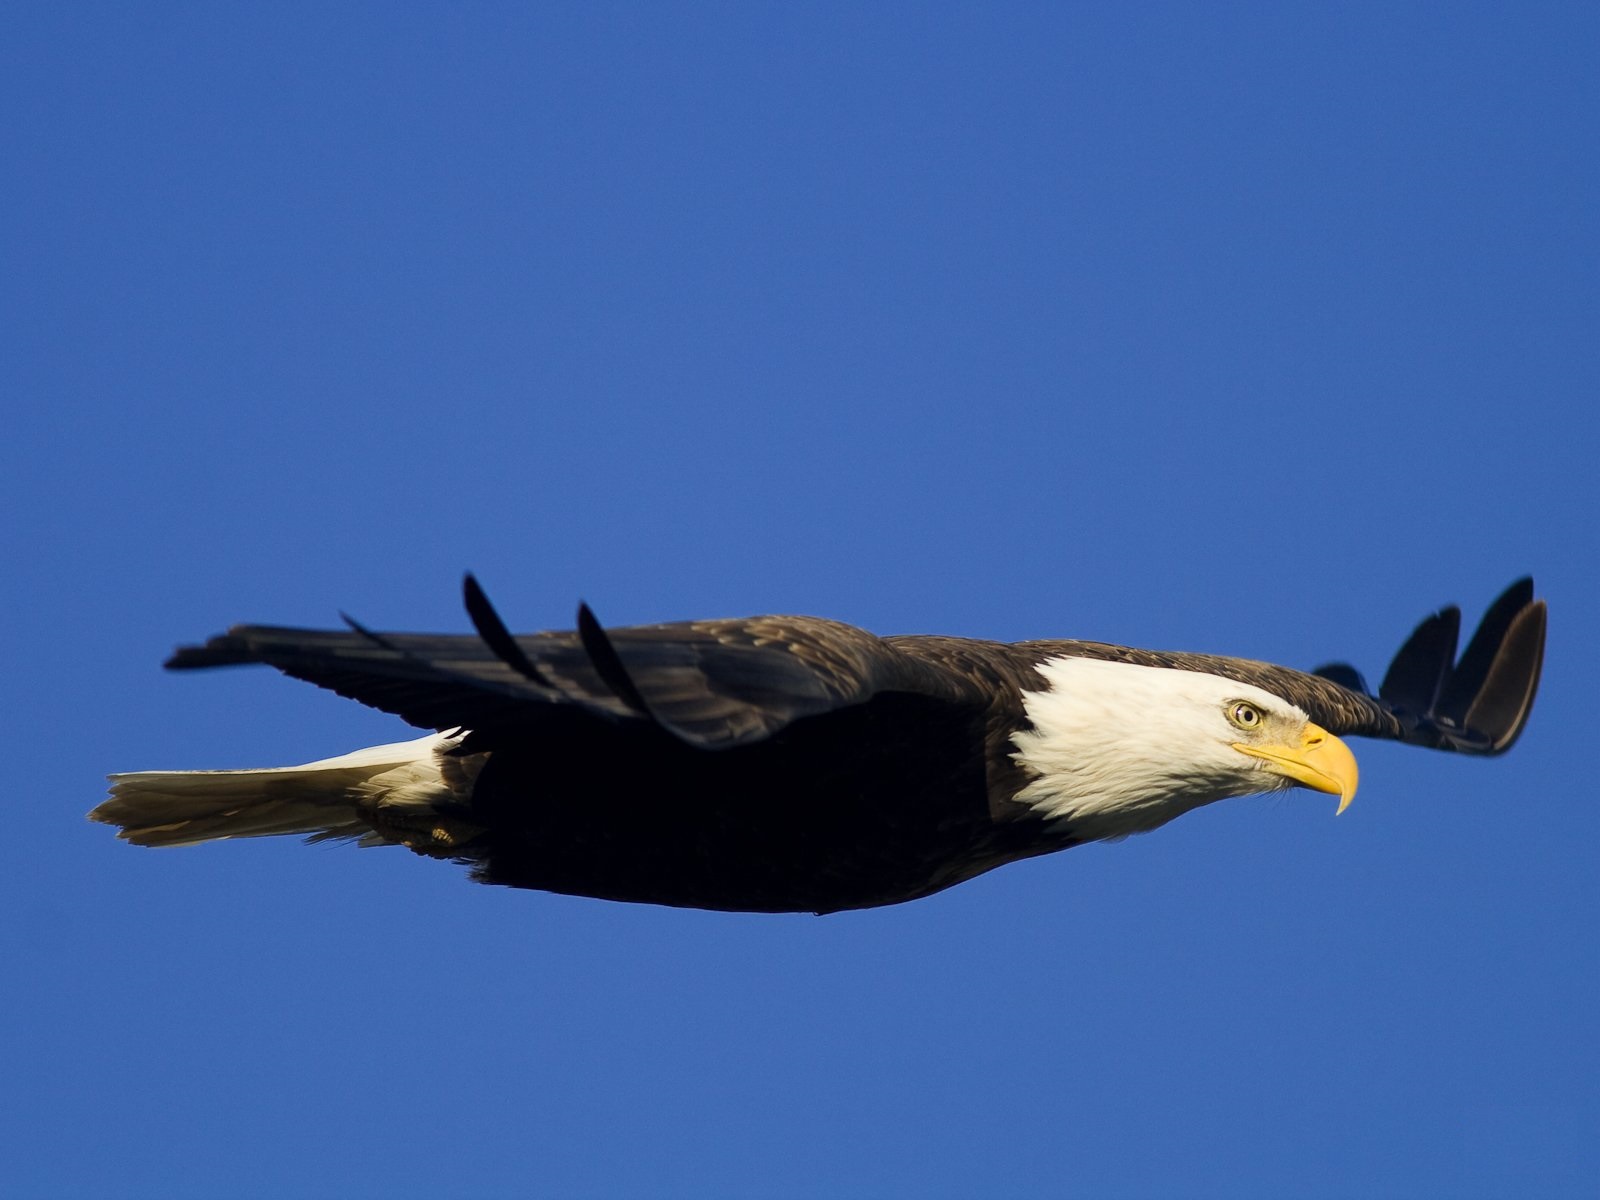 mobile desktop background bald eagle facts and pics download